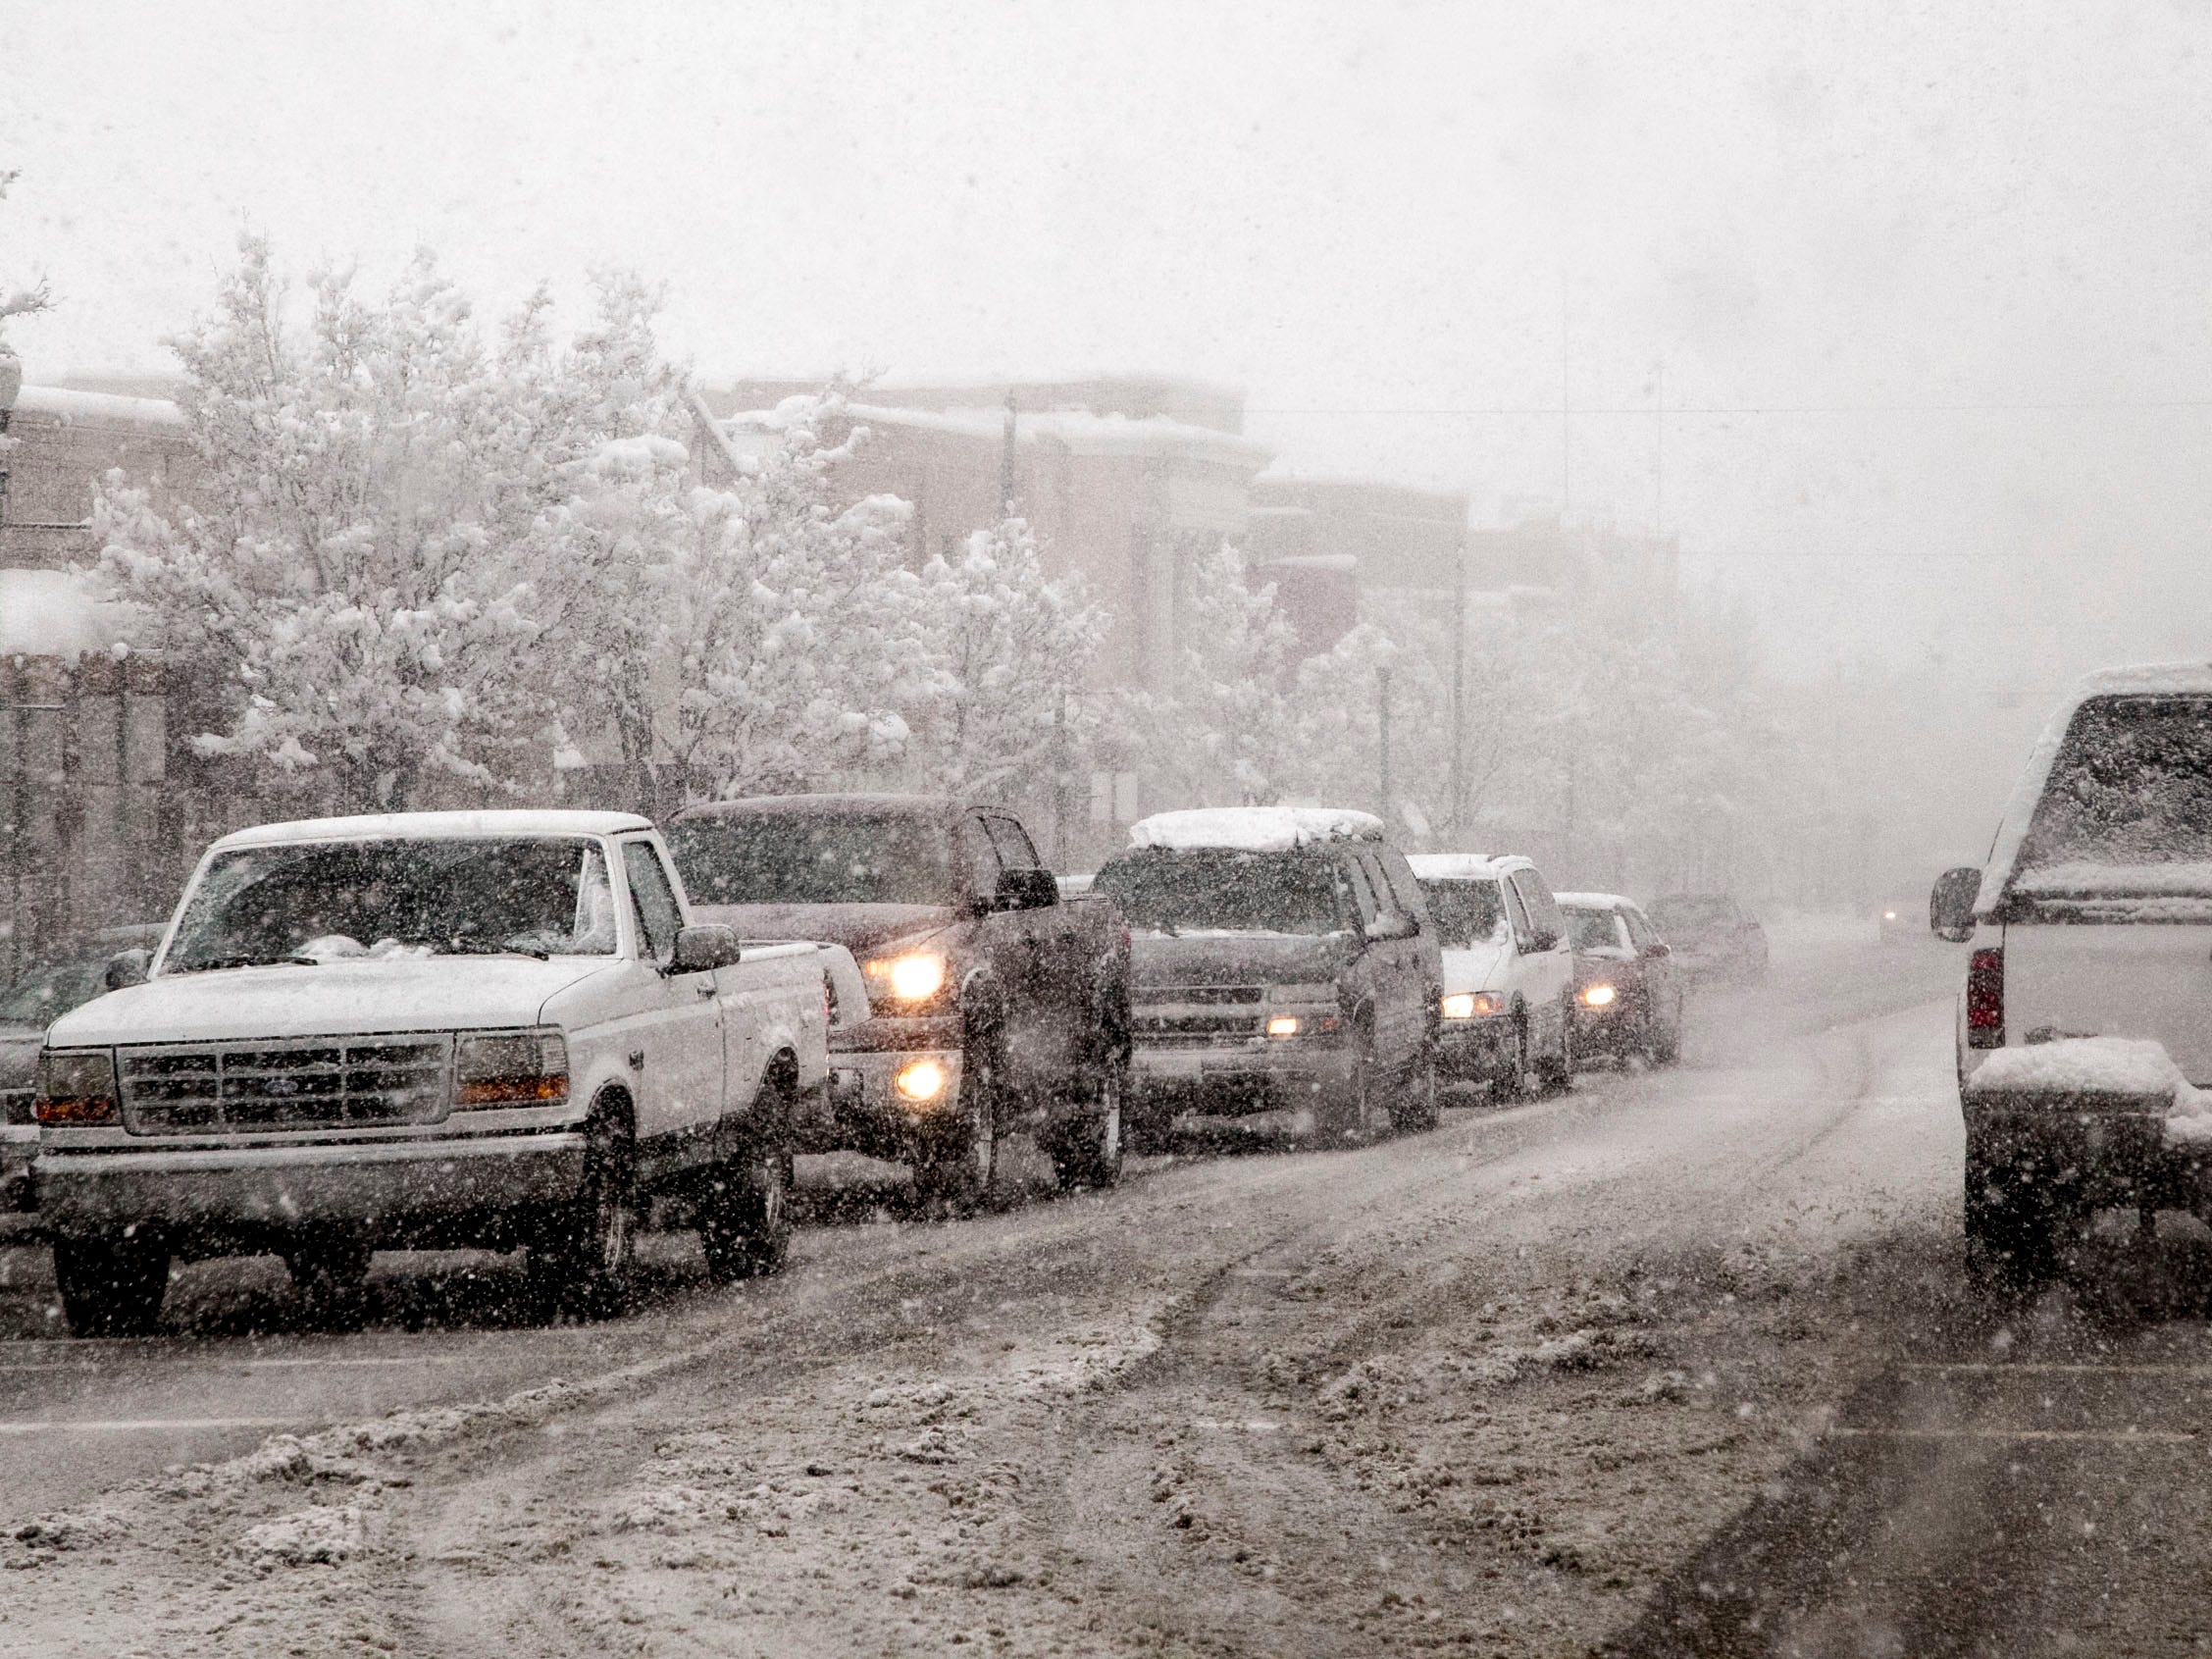 No white Christmas Cedar nears 40year record for latest snowfall